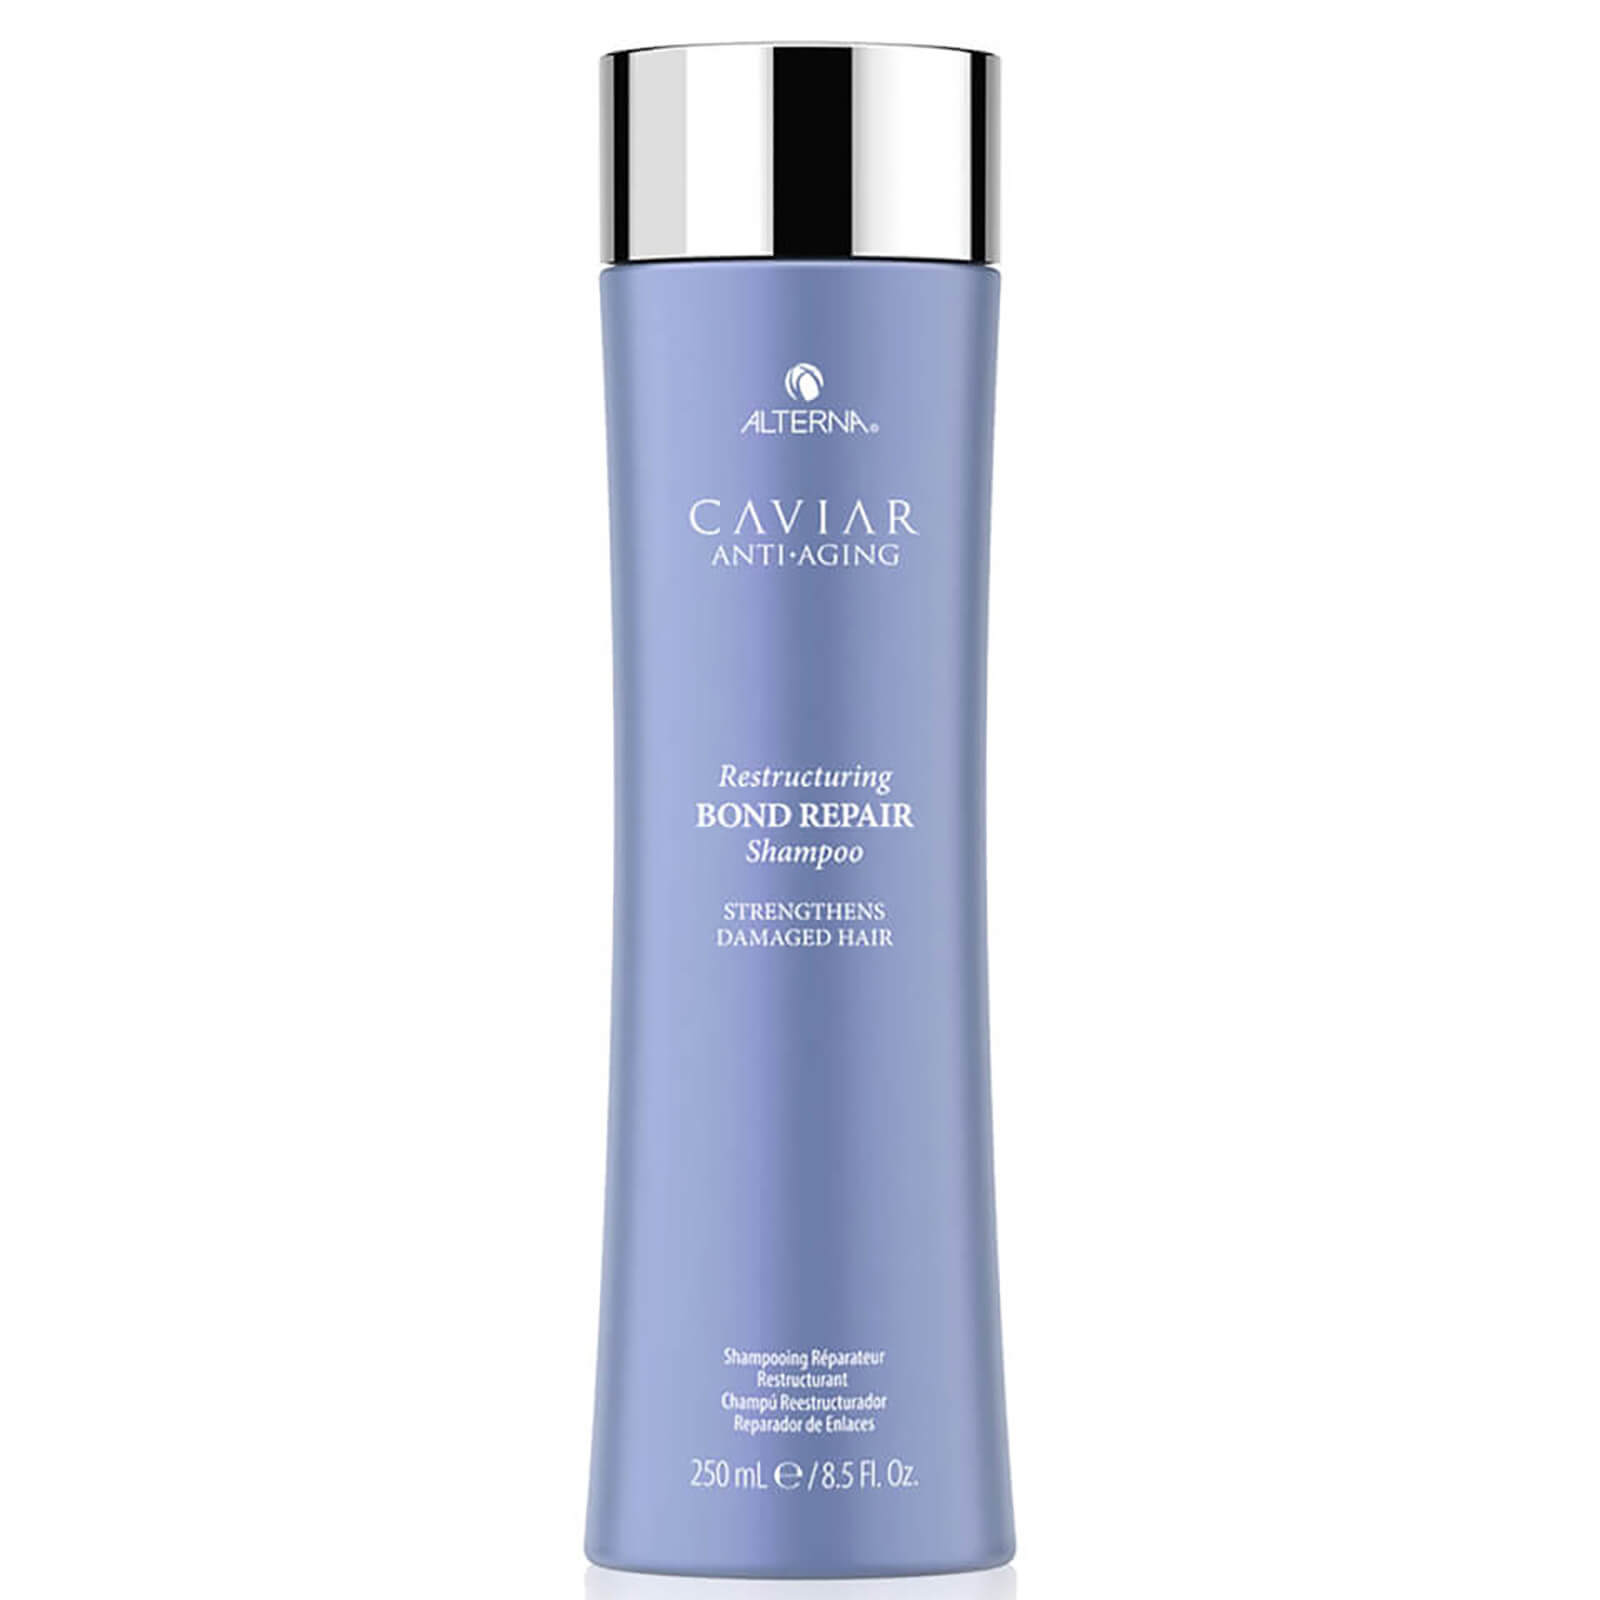 Alterna Caviar Anti-Aging Restructuring Bond Repair Shampoo lookfantastic.com imagine